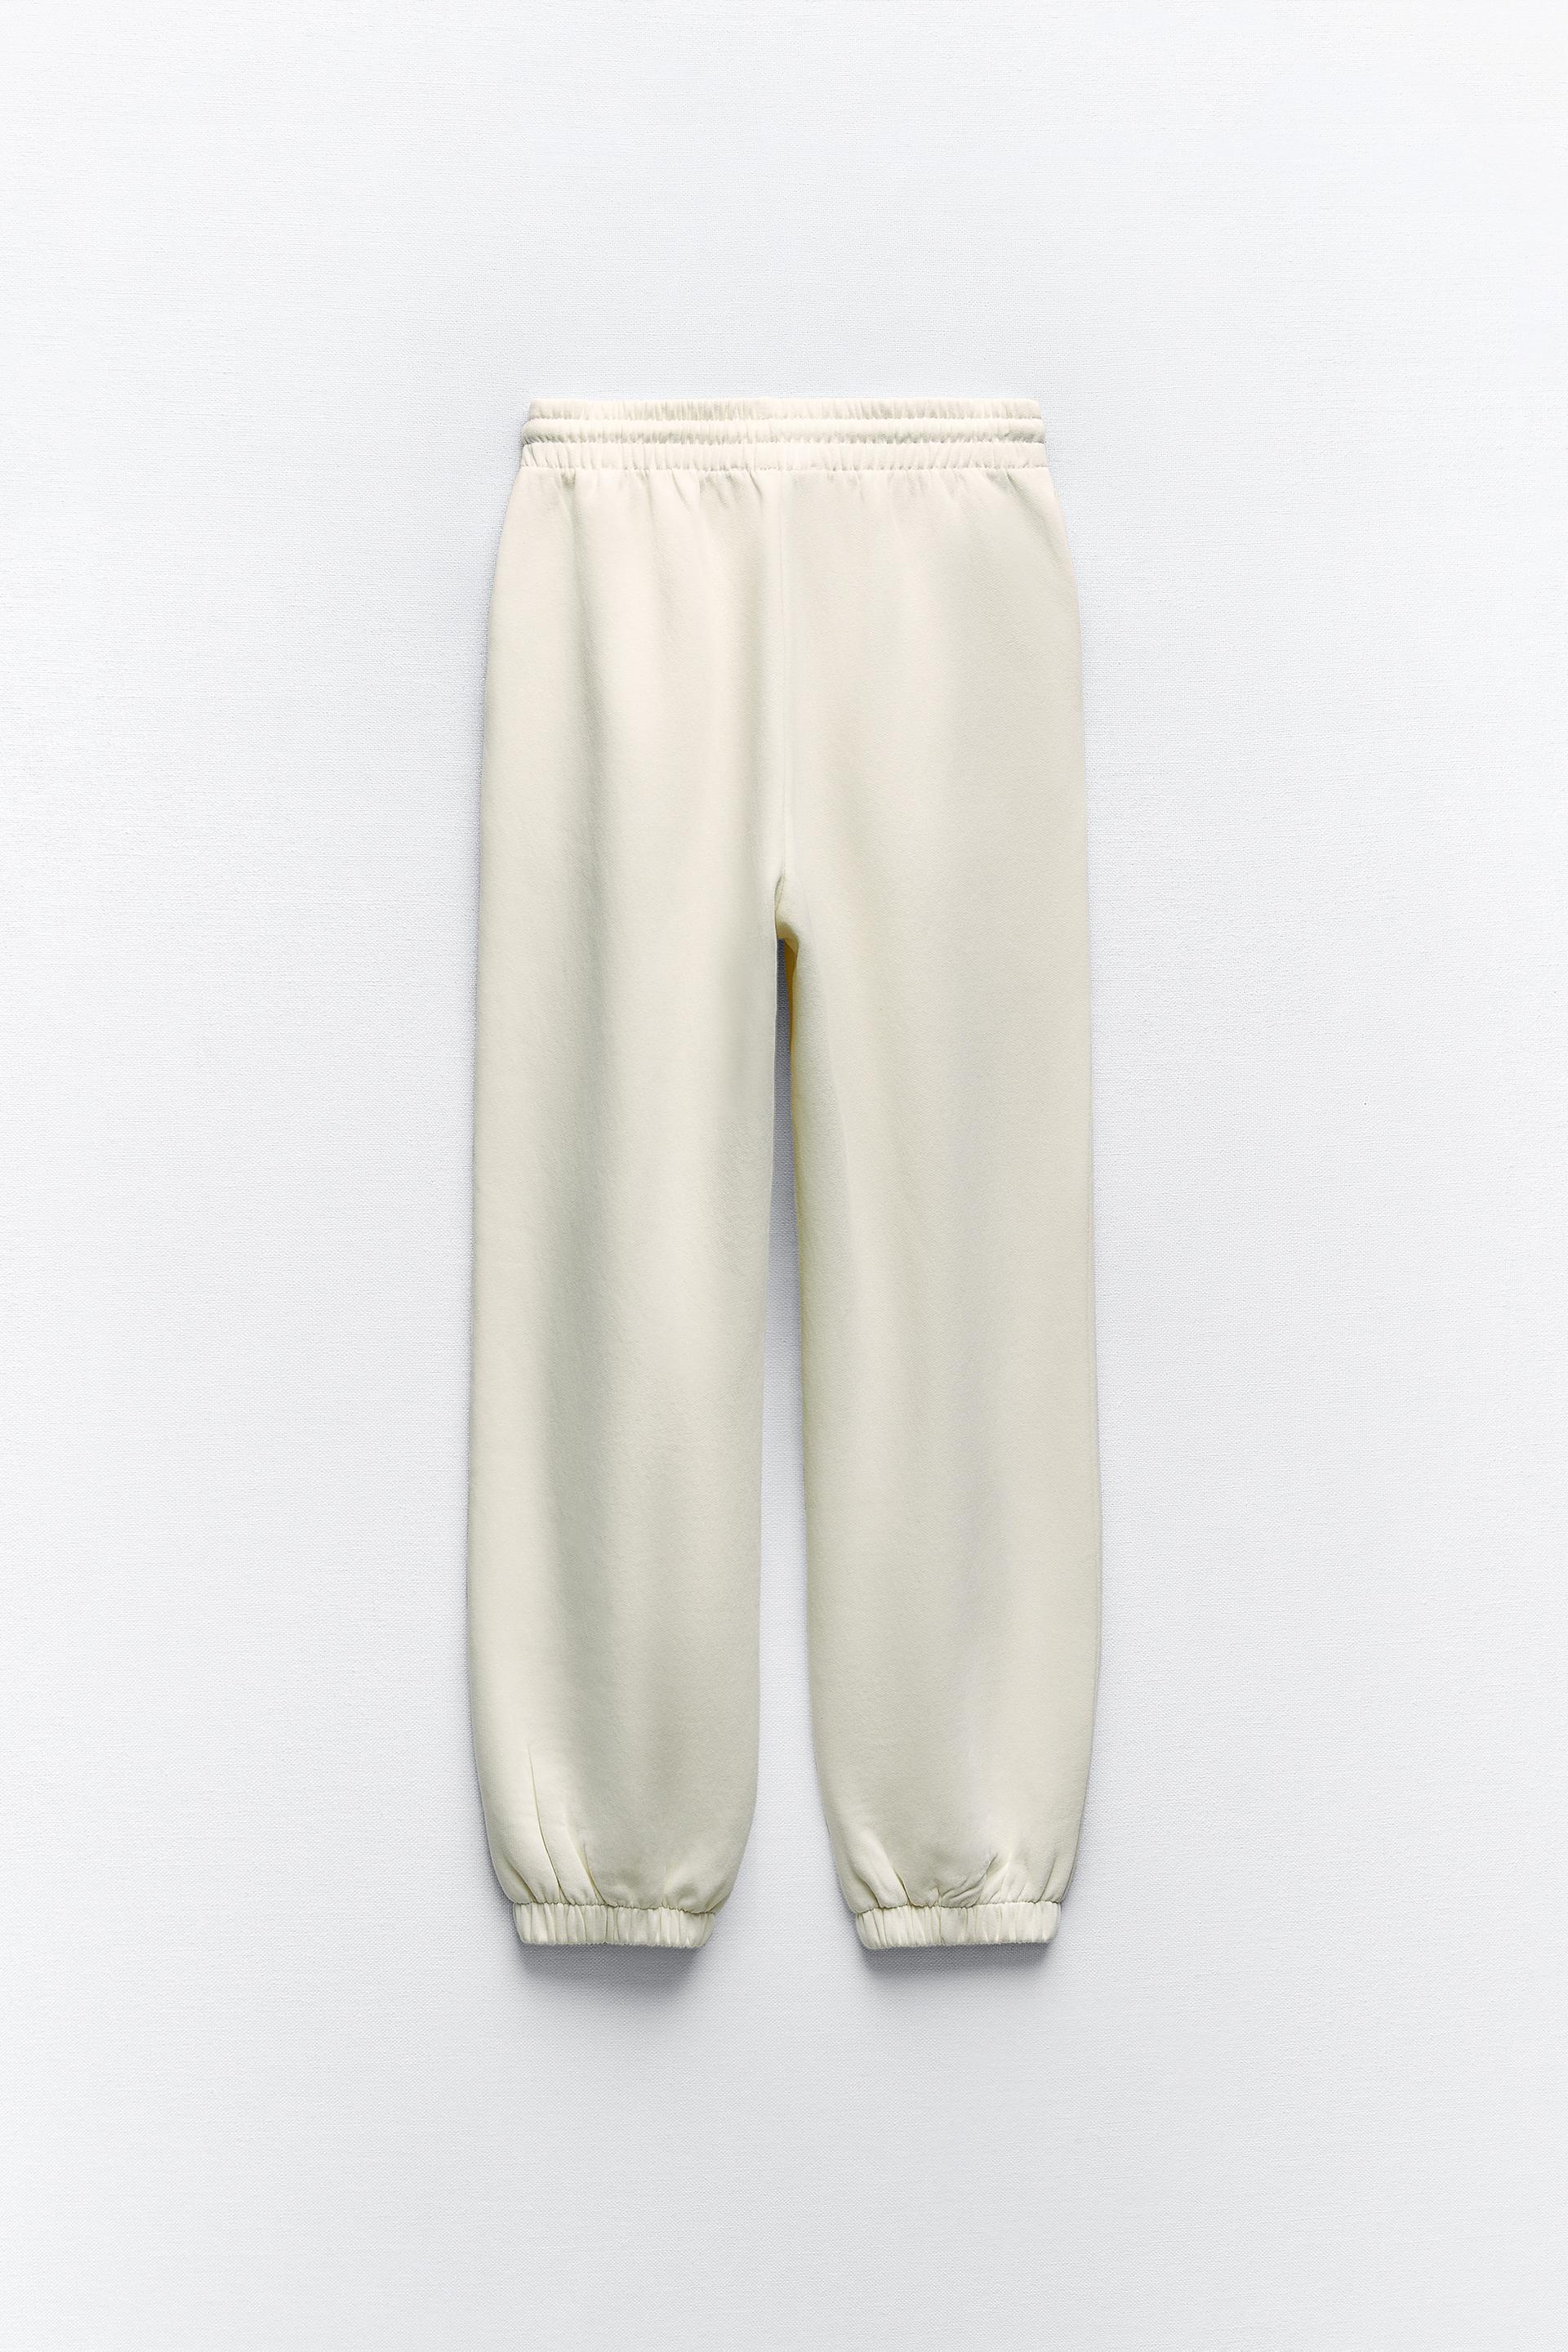 I'm obsessed Run to Zara (Ref: 8417/805) #sweatpants